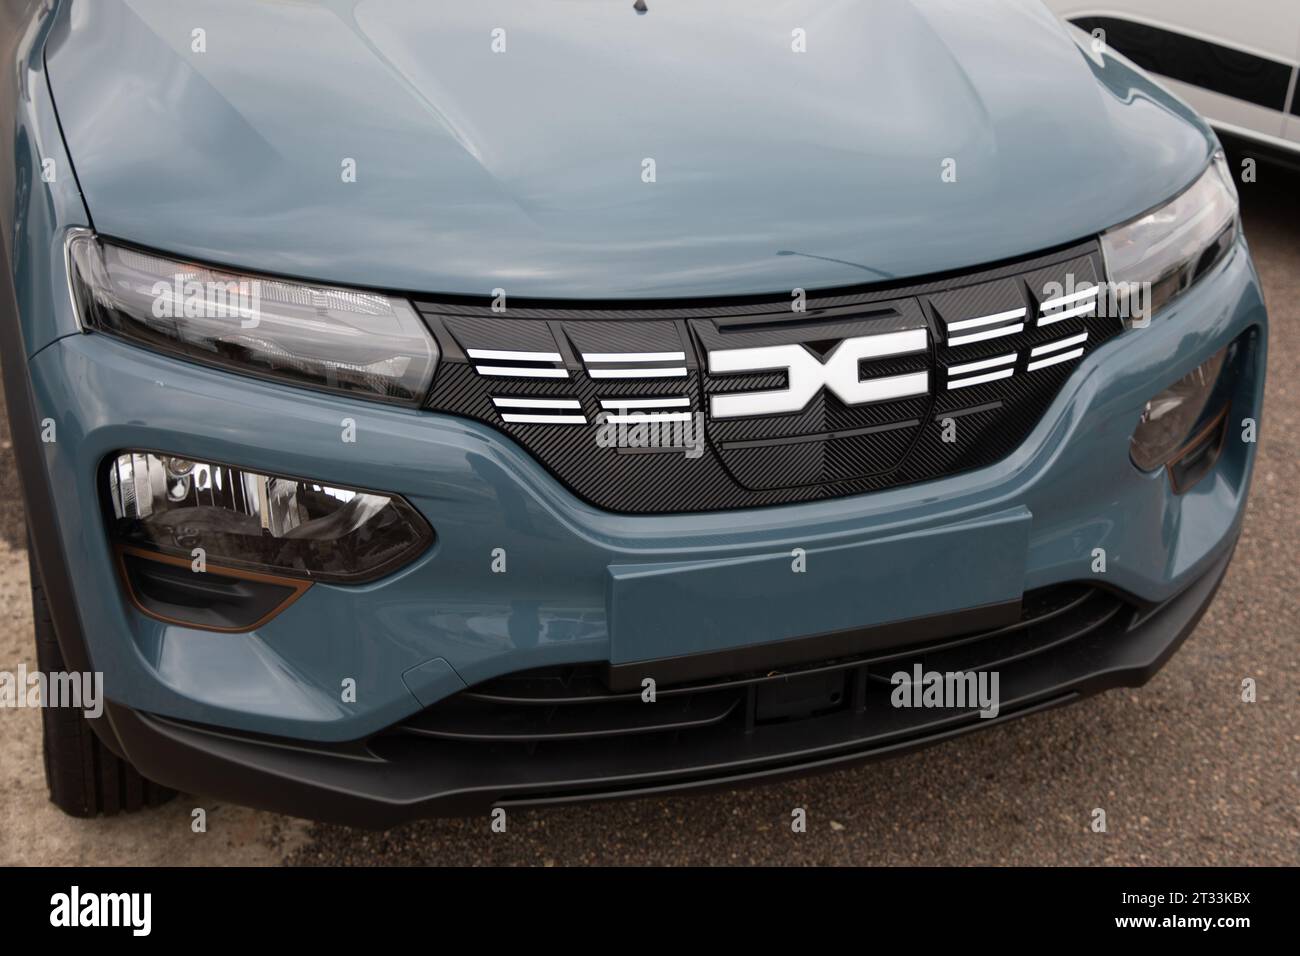 Dacia jogger hi-res stock photography and images - Alamy